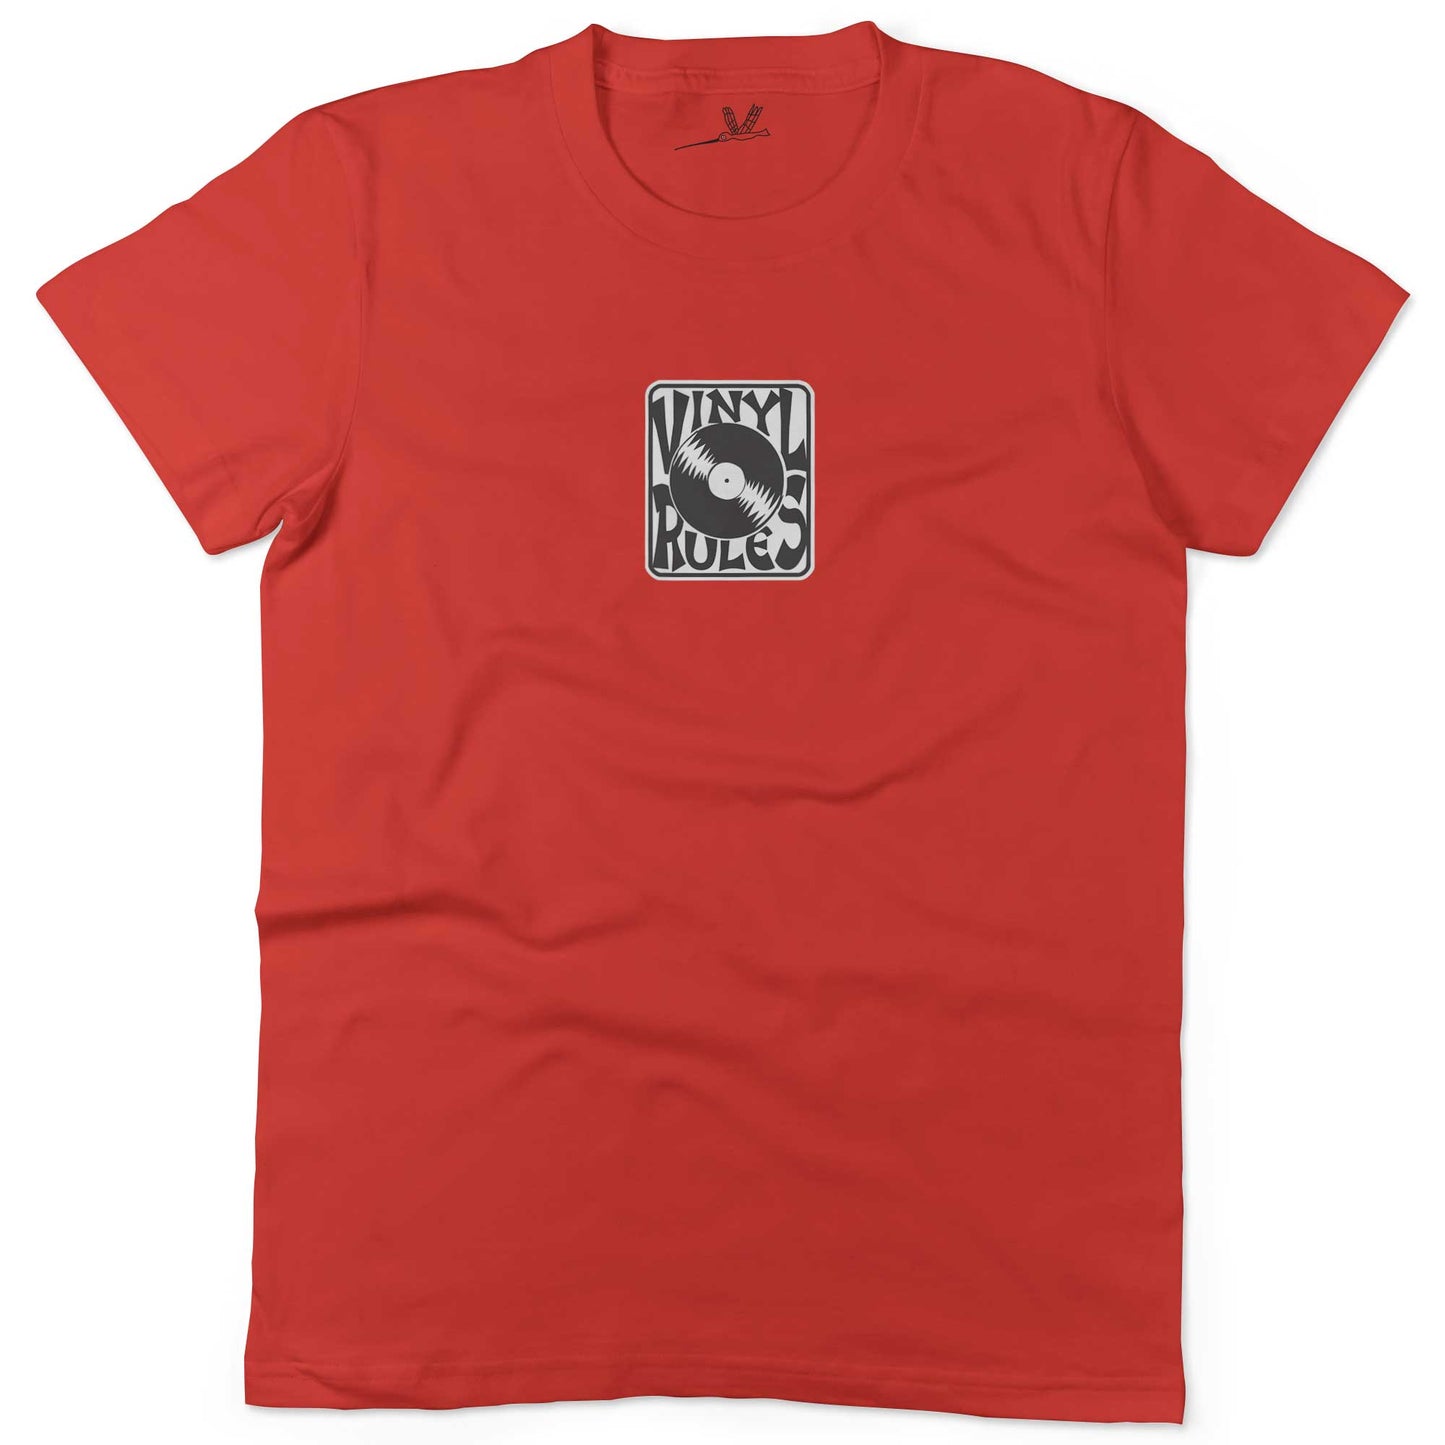 Vinyl Rules Unisex Or Women's Cotton T-shirt-Red-Woman